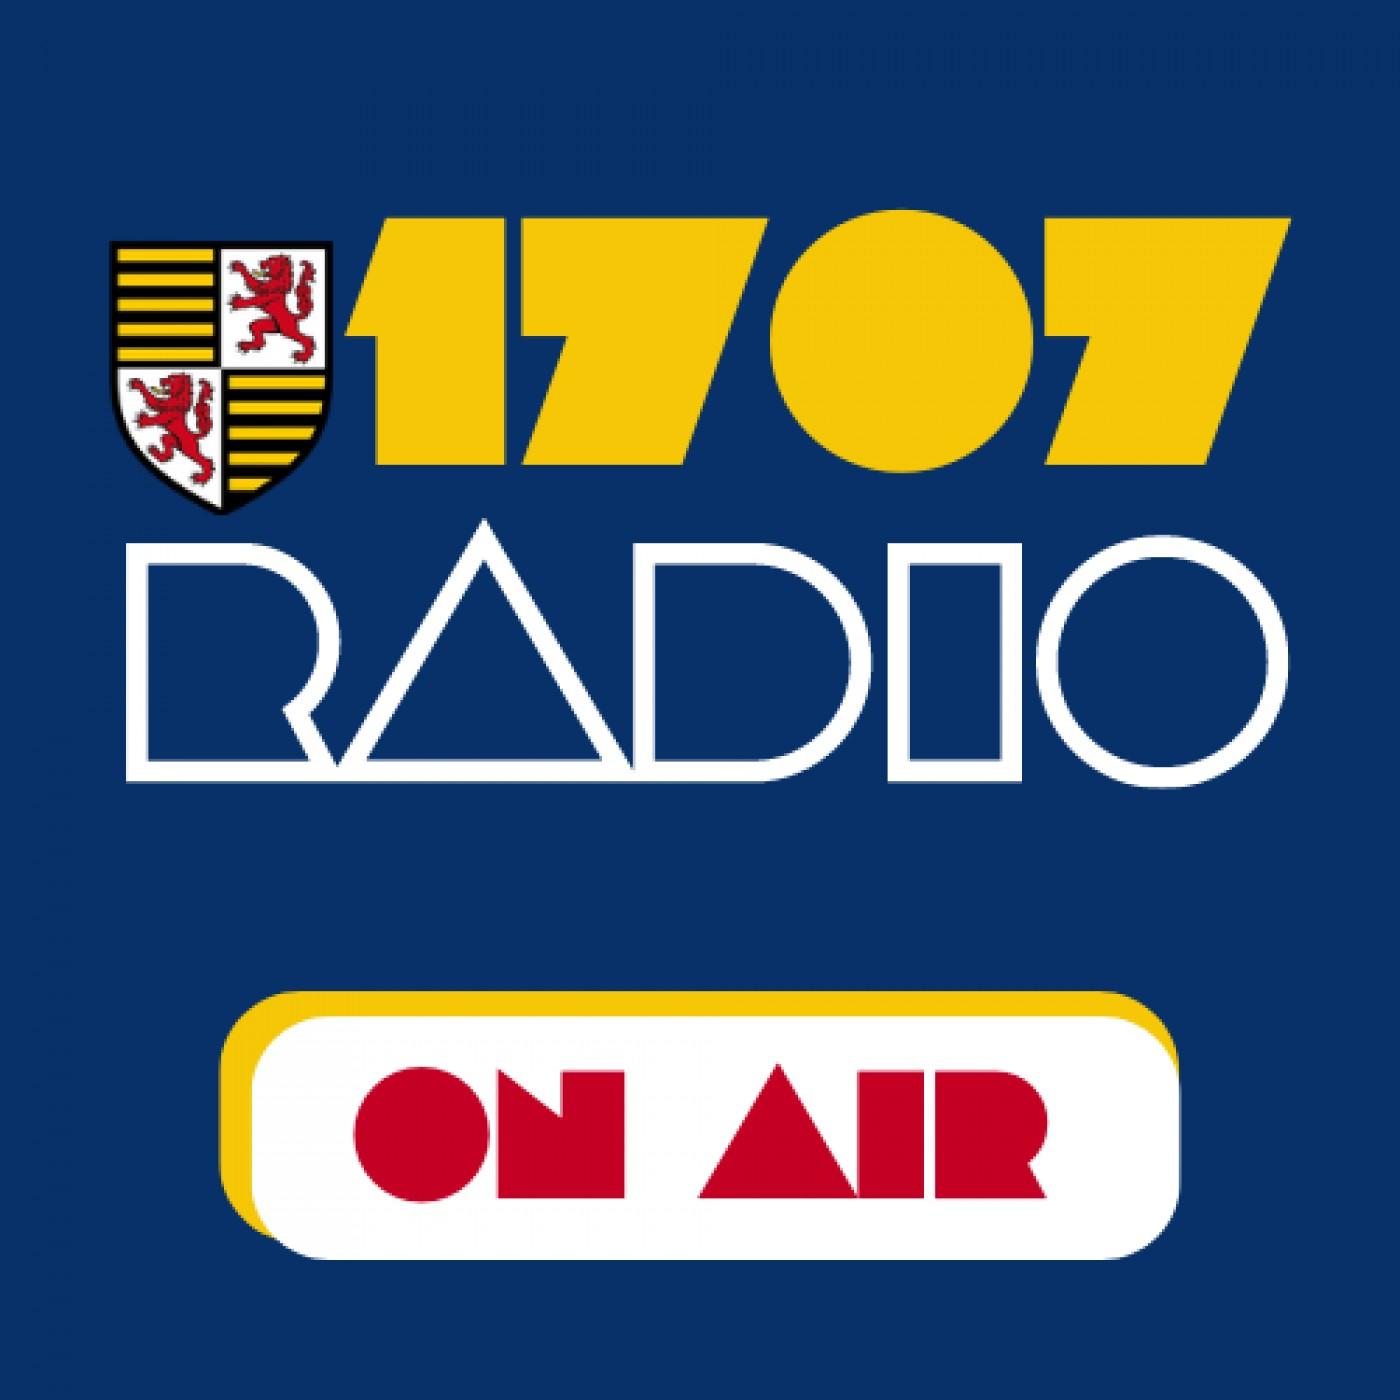 1707 Radio Podcasts